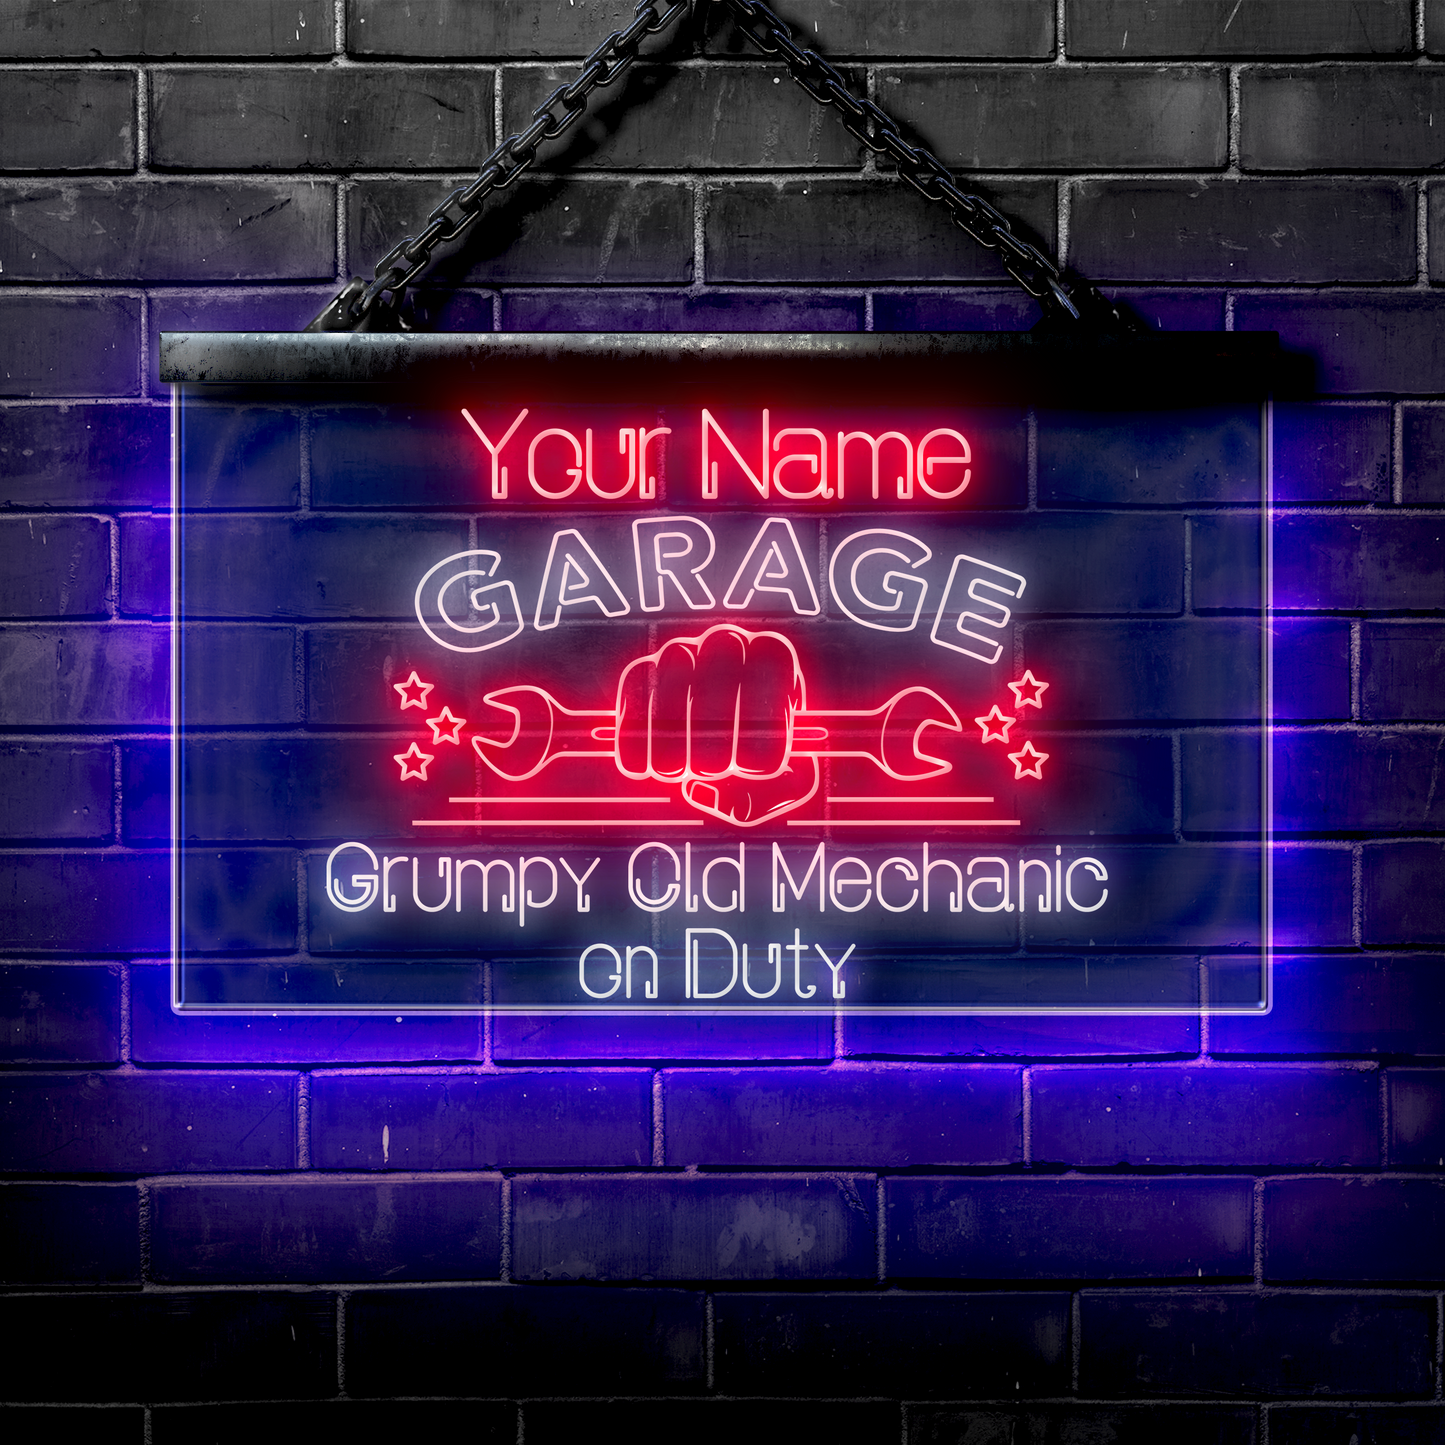 Personalized LED Garage Sign: Grumpy Old Mechanic on Duty